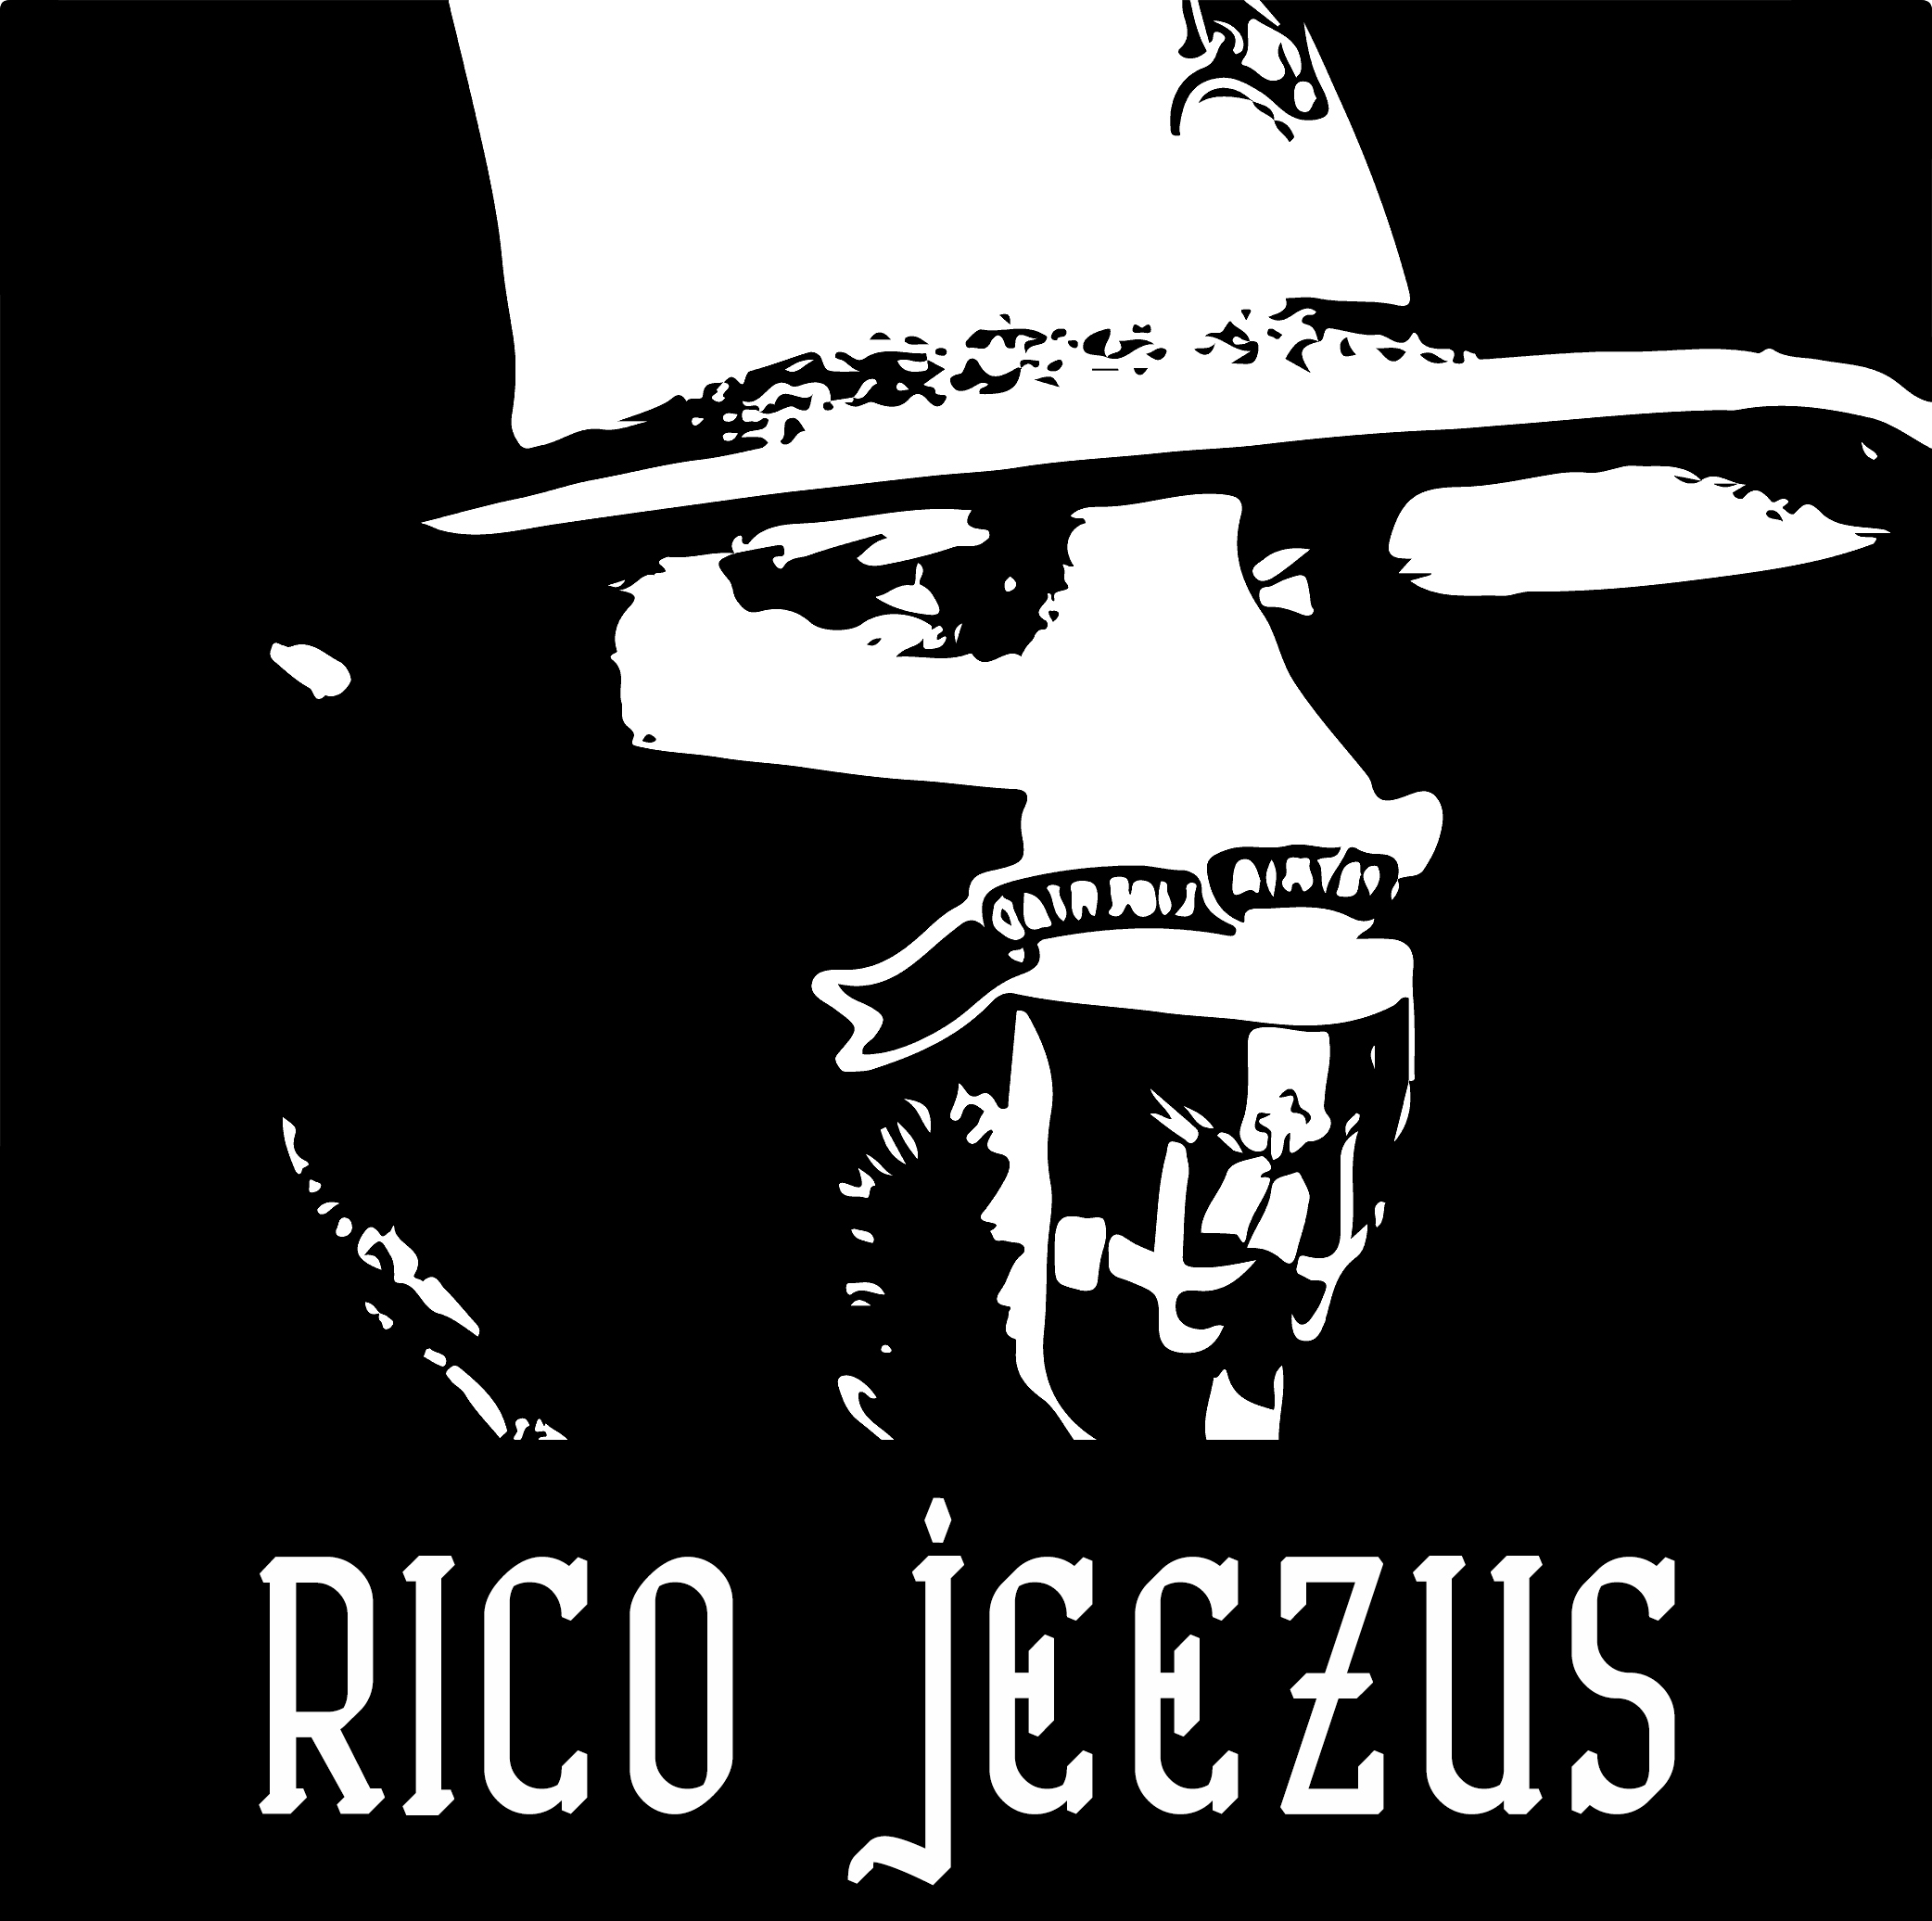  Rico Jeezus – A Misanthropist Heaven